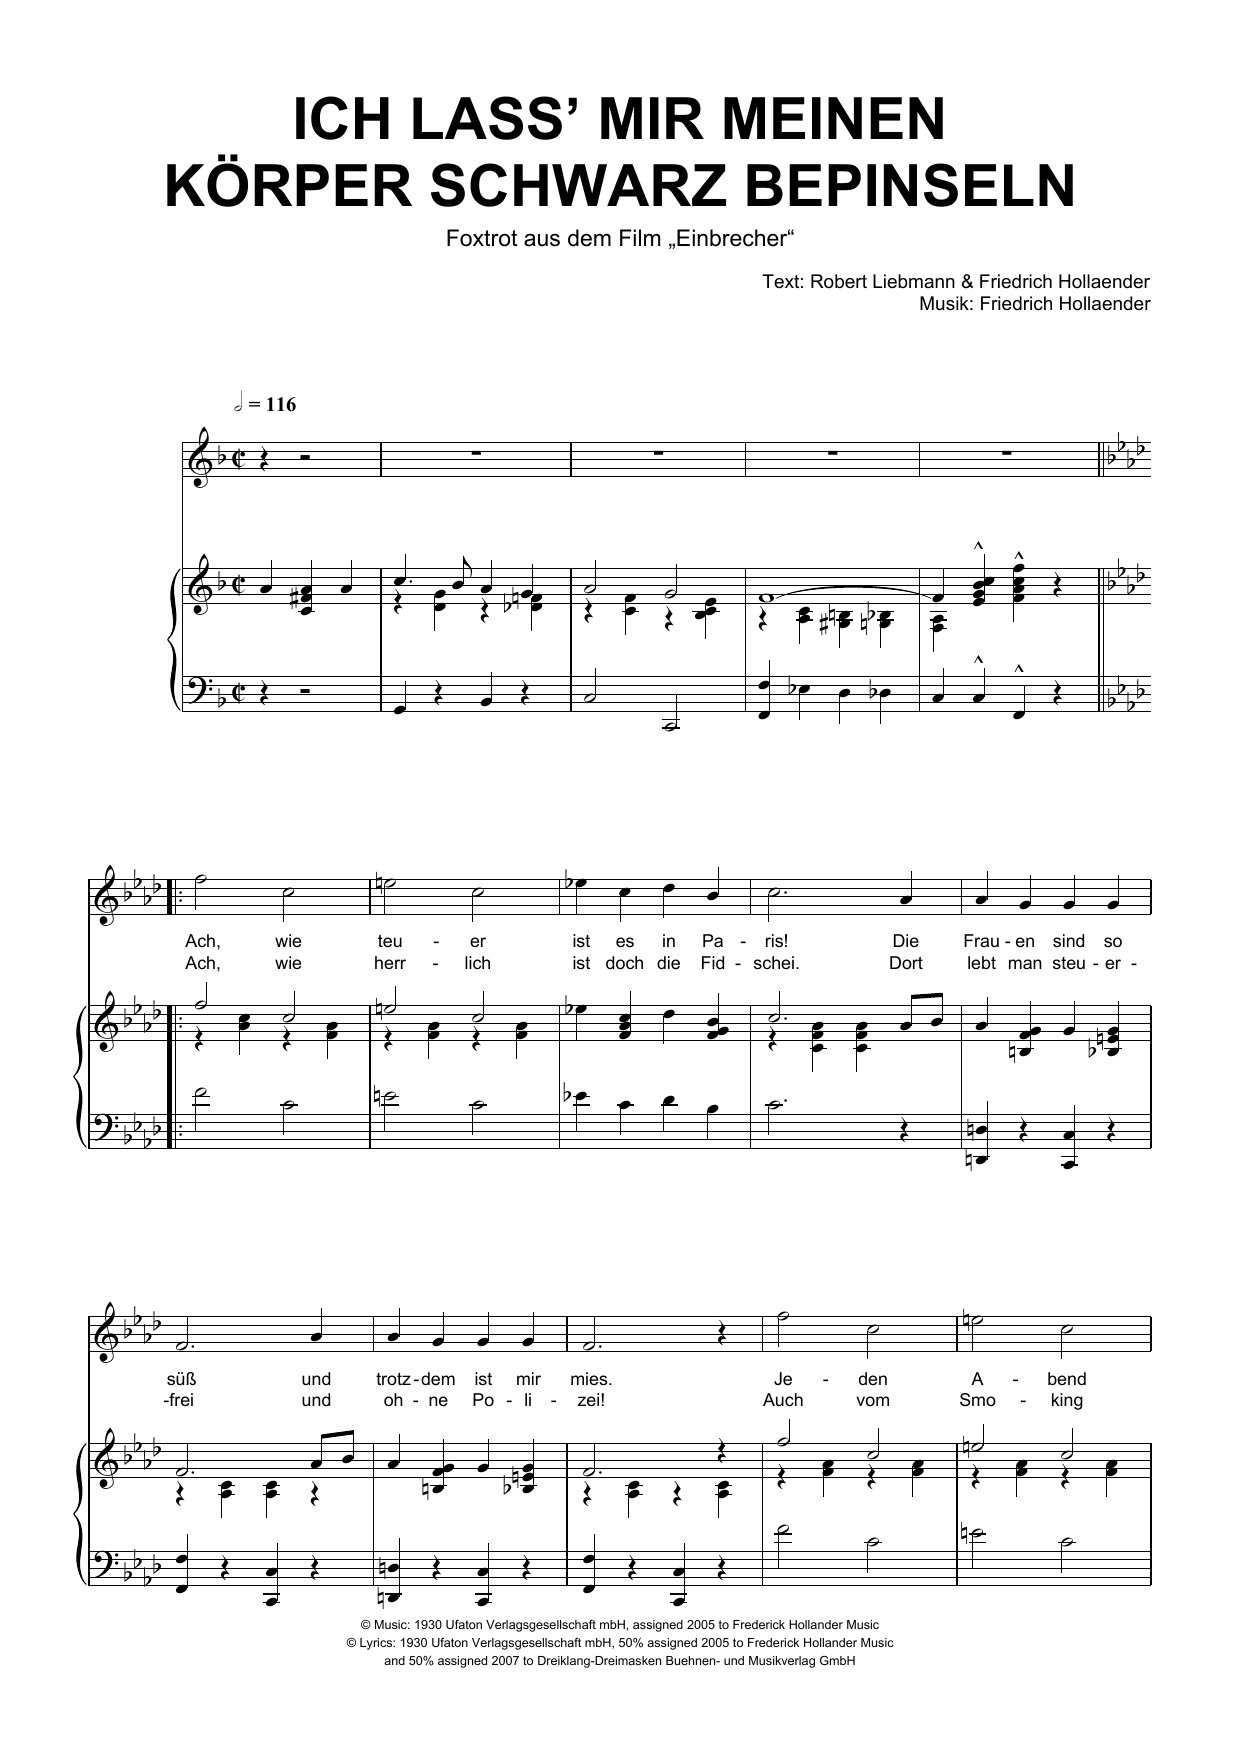 Download Friedrich Hollaender Ich Lass Mir Meinen Körper Schwarz Bepinseln Sheet Music and learn how to play Piano & Vocal PDF digital score in minutes